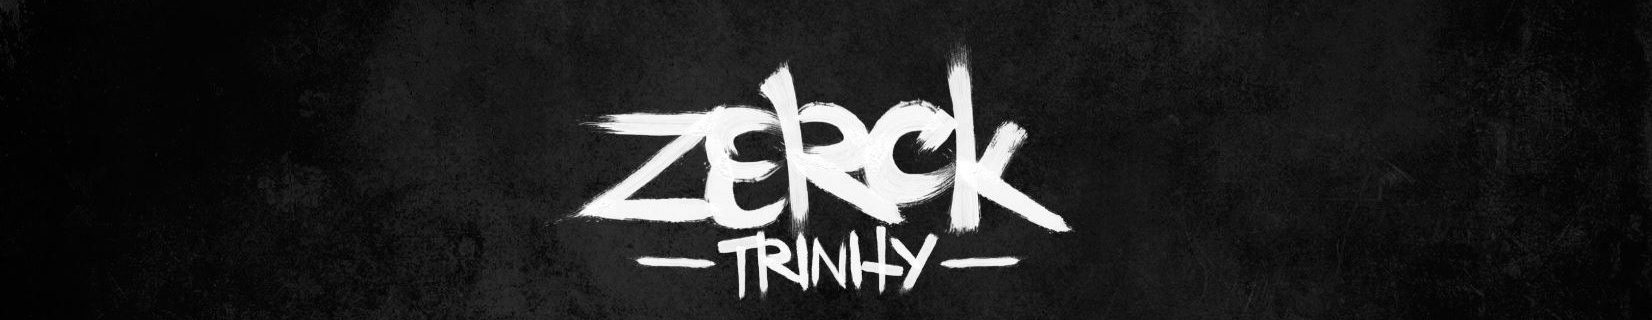 Zerck Trinity's profile banner